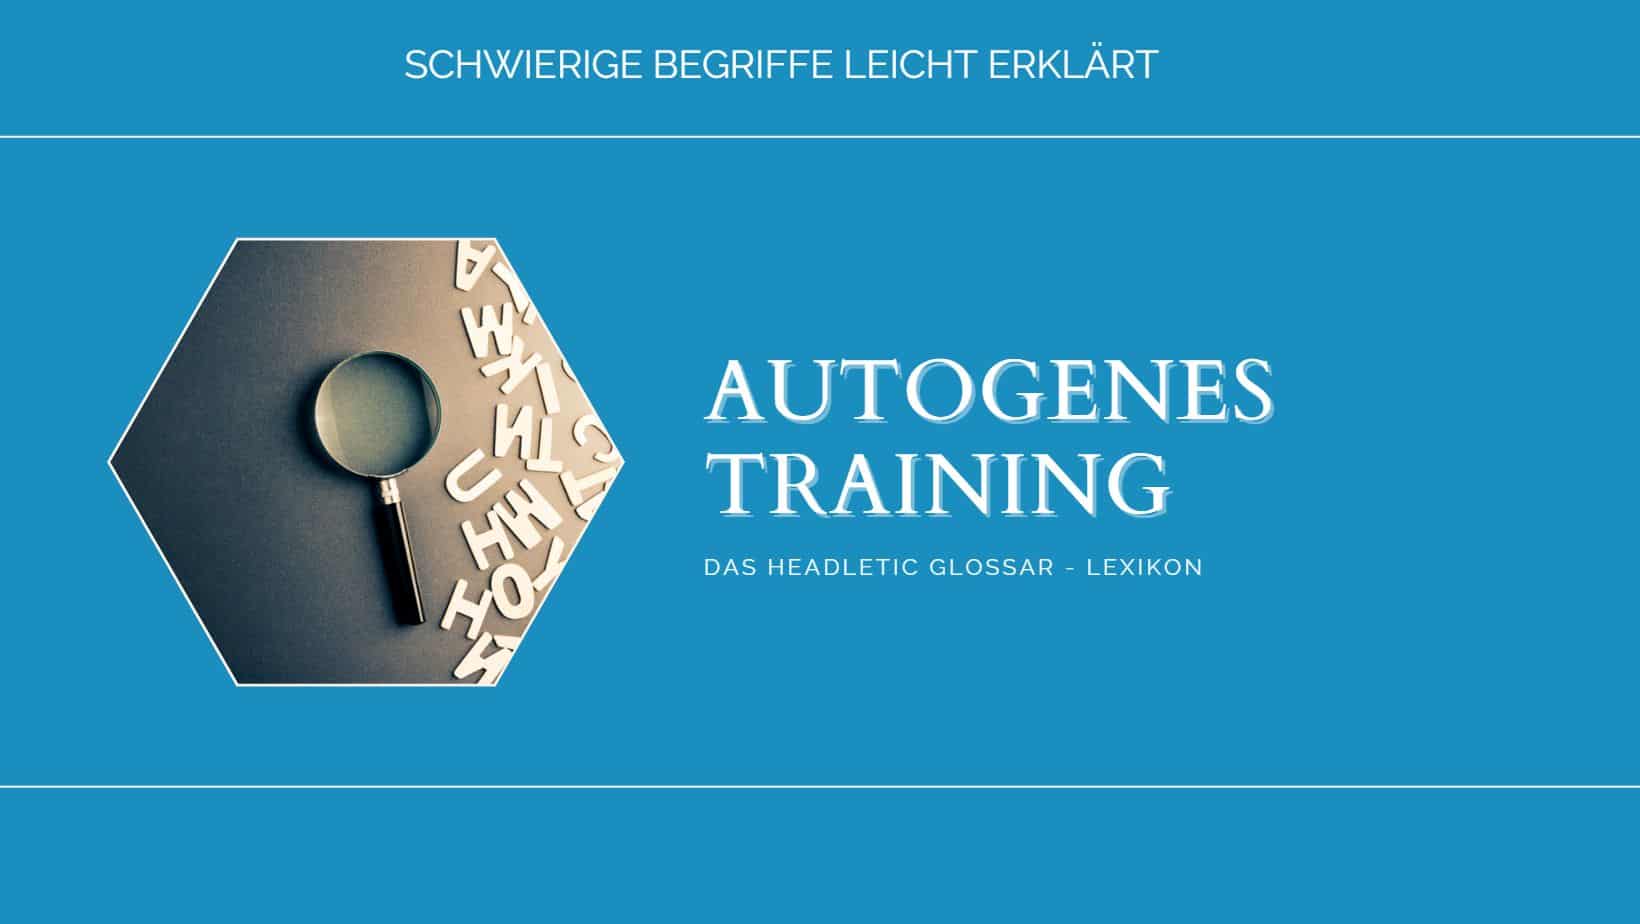 Autogenes Training - leicht erklärt - Headletic Glossar